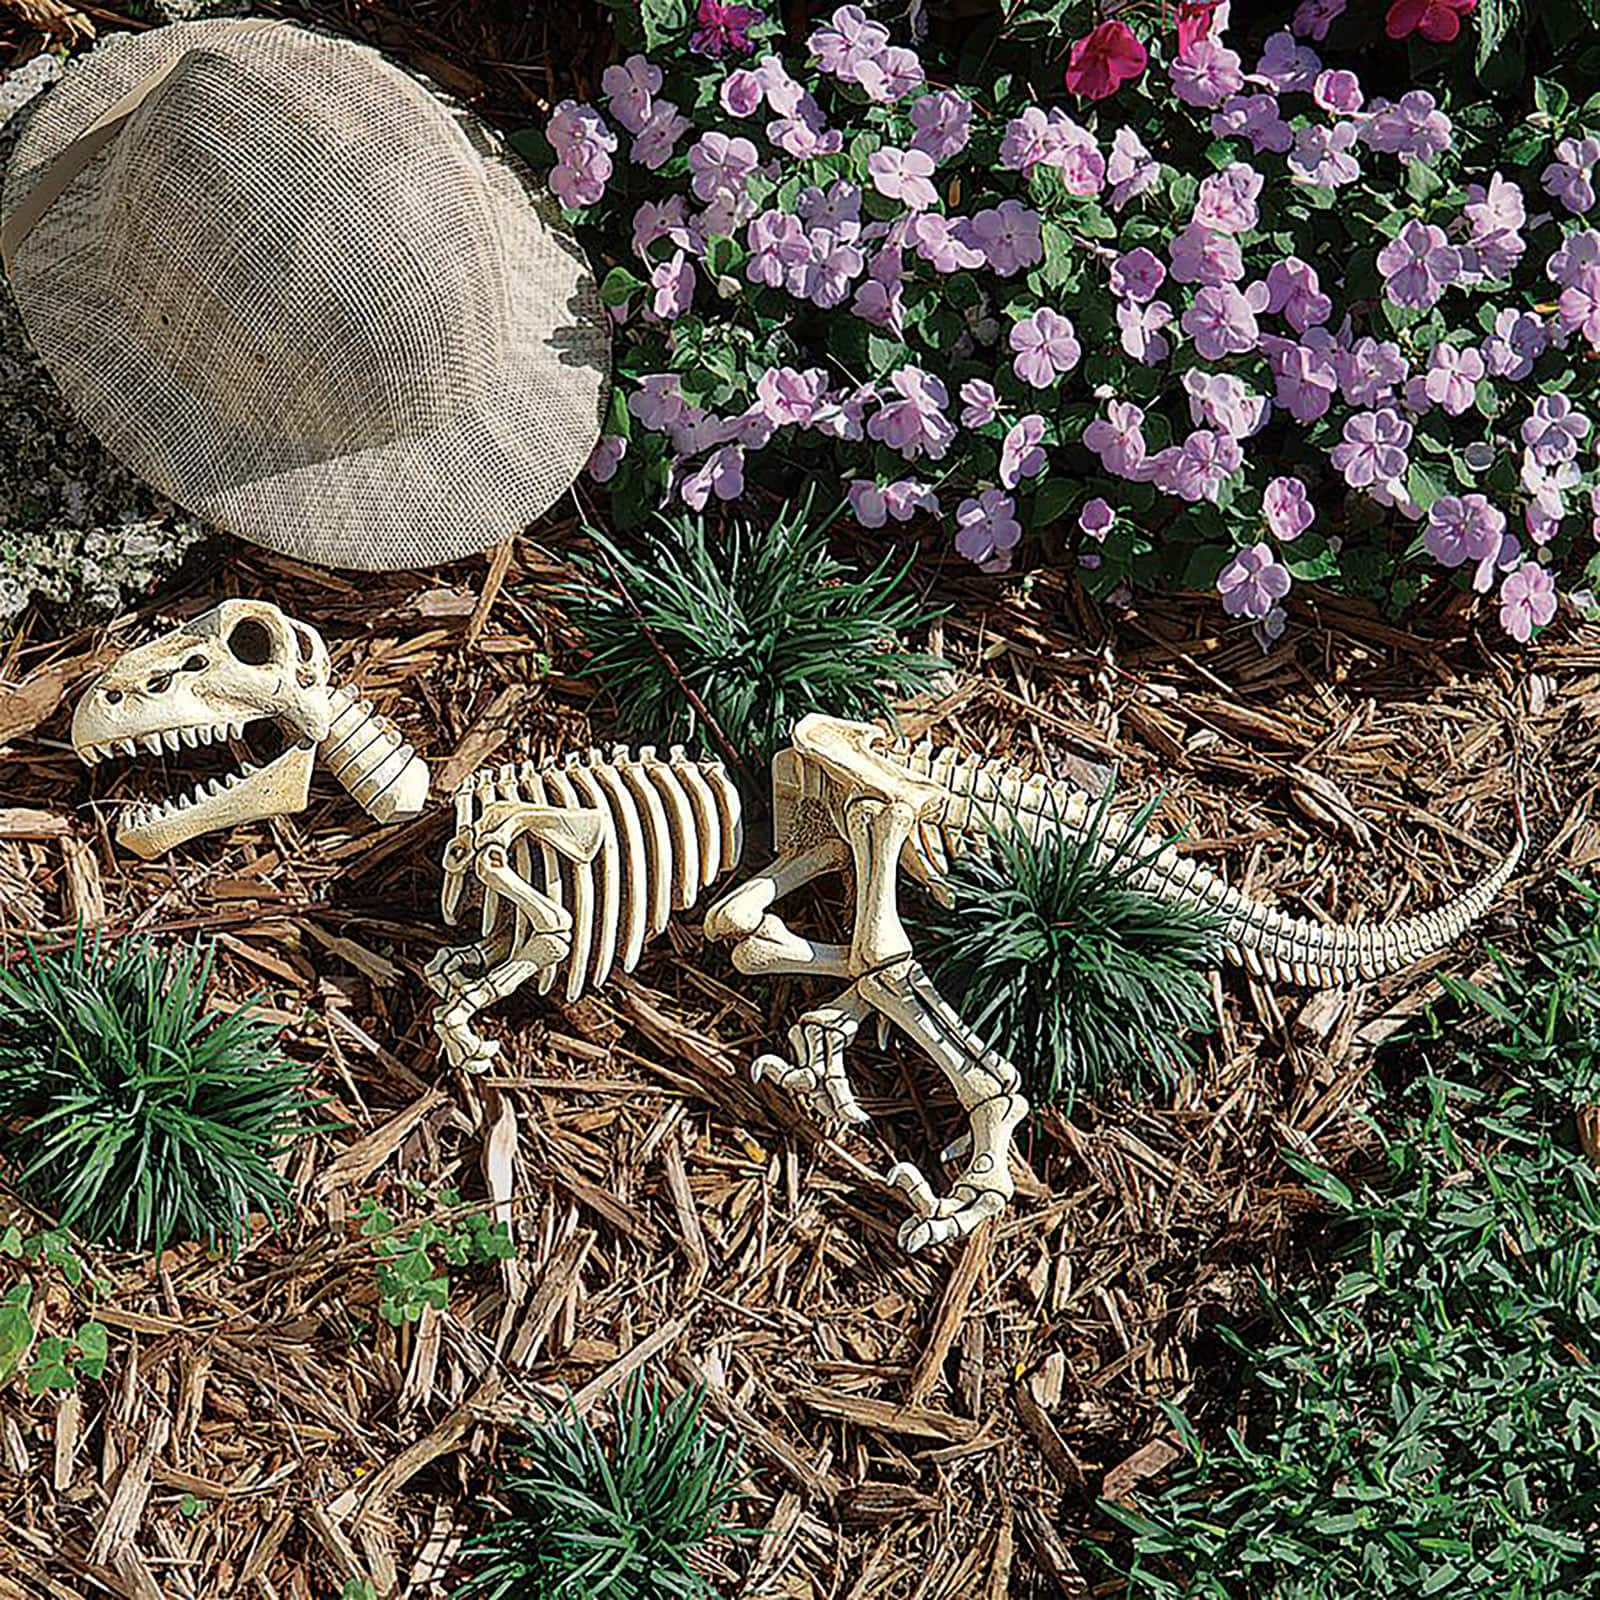 Design Toscano Raptor Skeleton Garden Sculpture